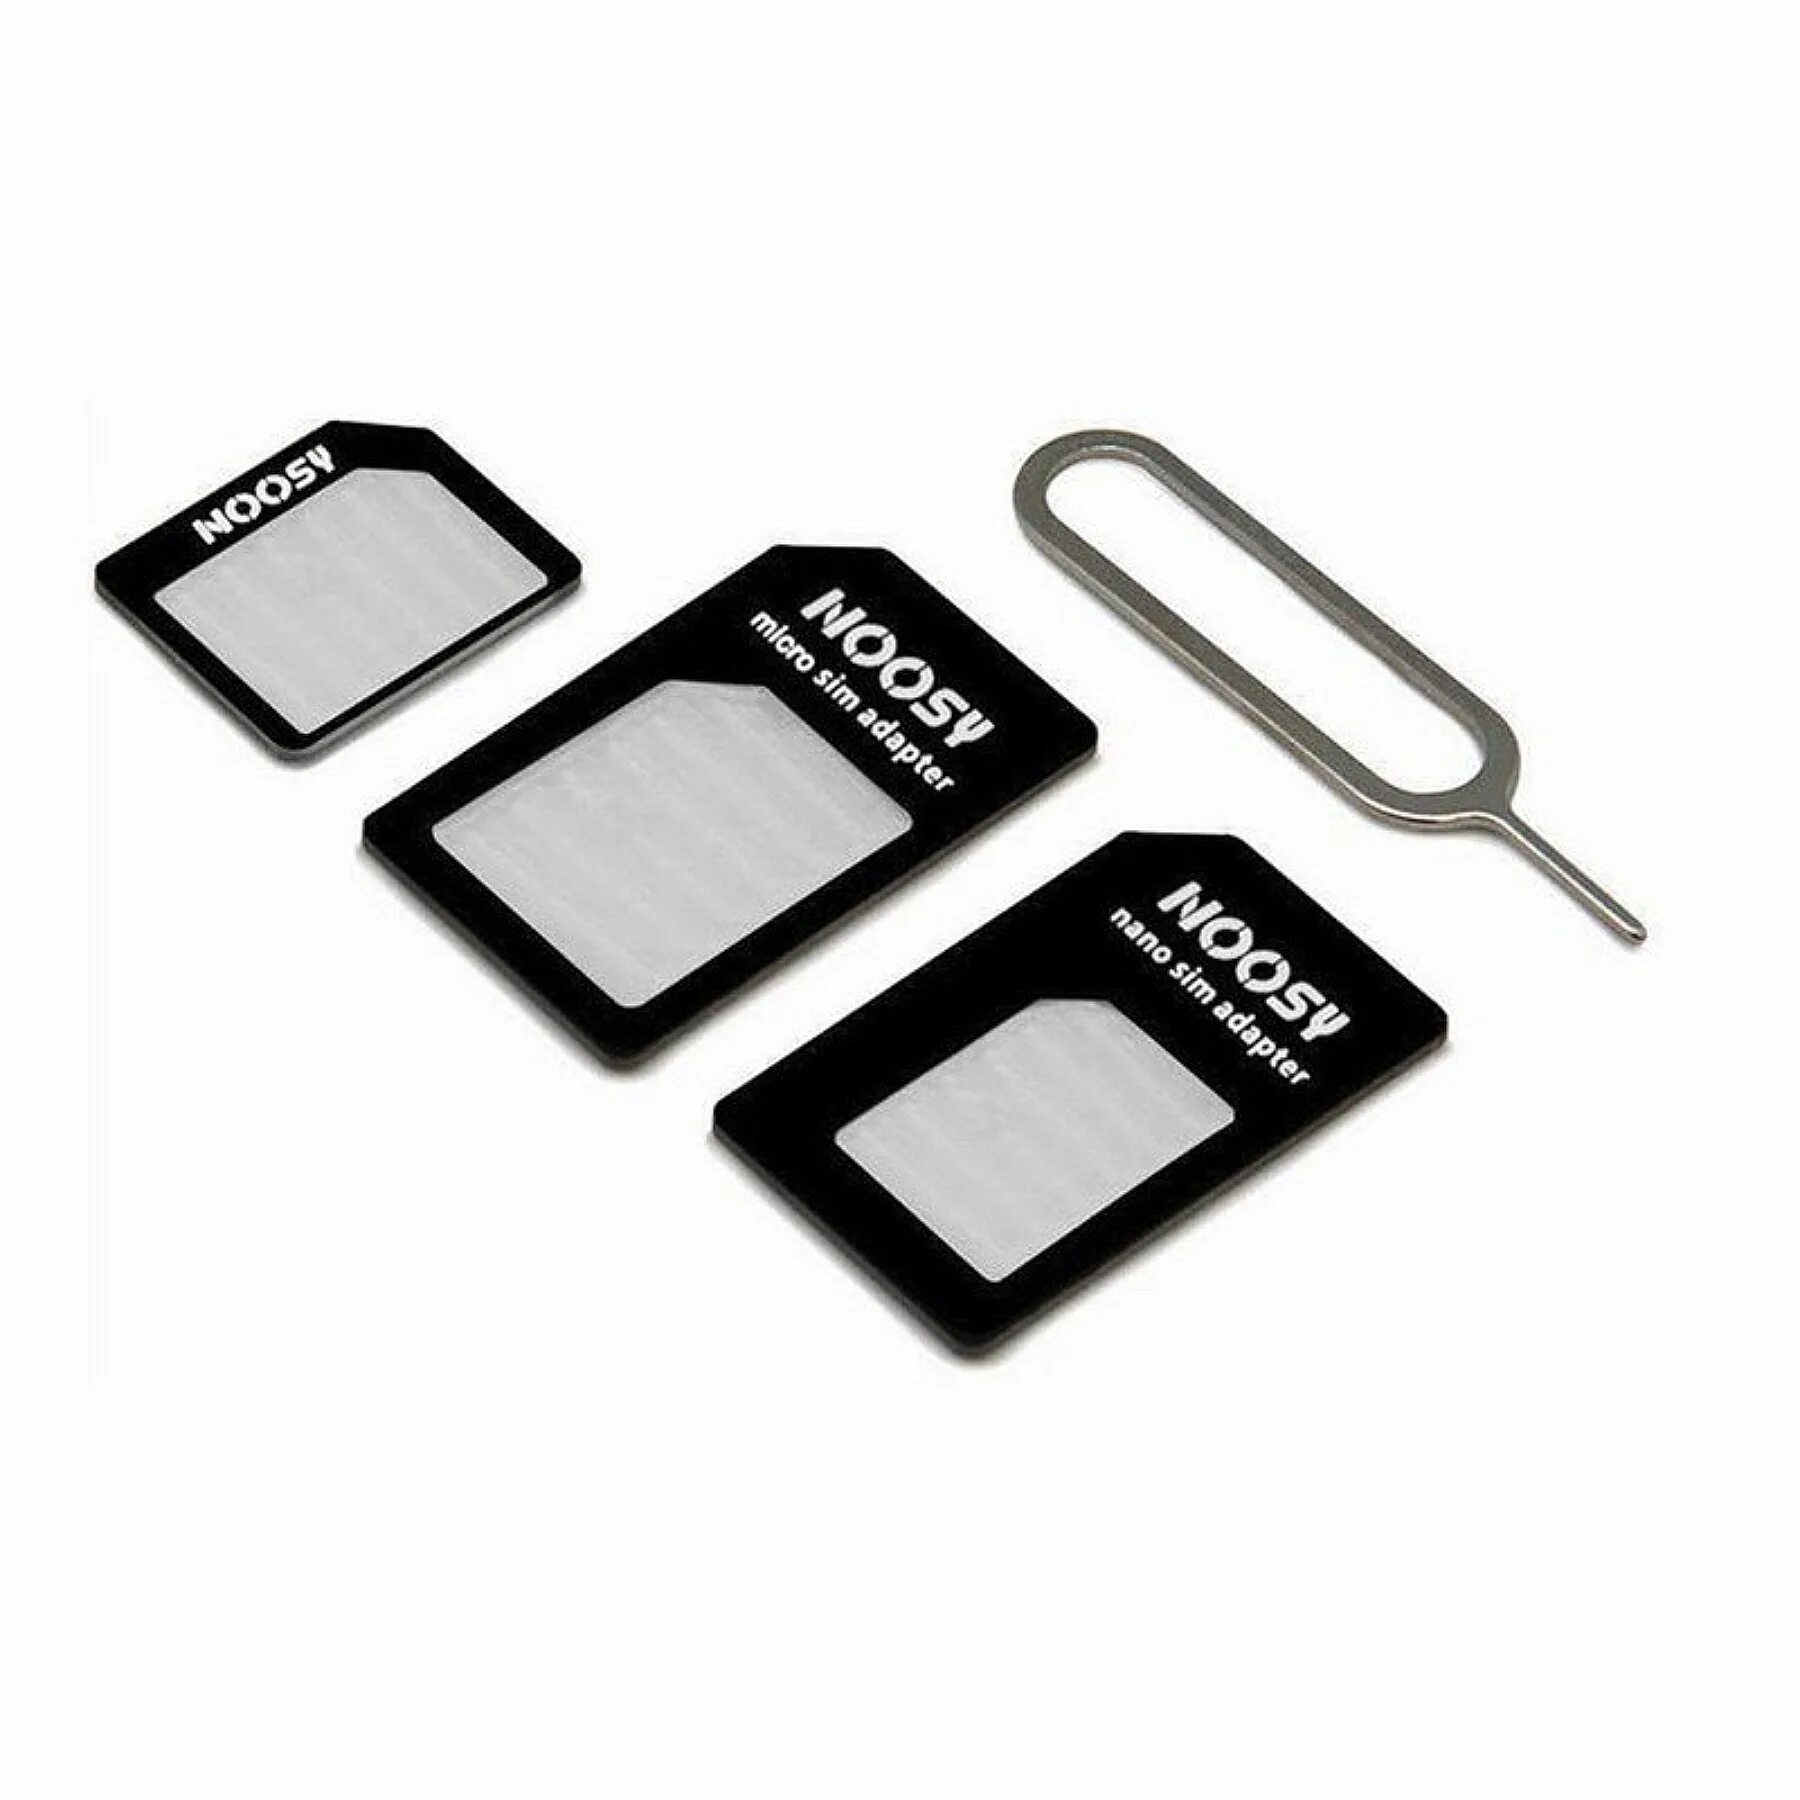 Карта памяти для слота сим карты. Noosy микро сим адаптер. Переходник SIM - Nano SIM - Micro SIM. Nano-SIM (12.3X8.8X0.67 мм). Адаптер 2 Nano SIM-карты + MICROSD гибридный слот.